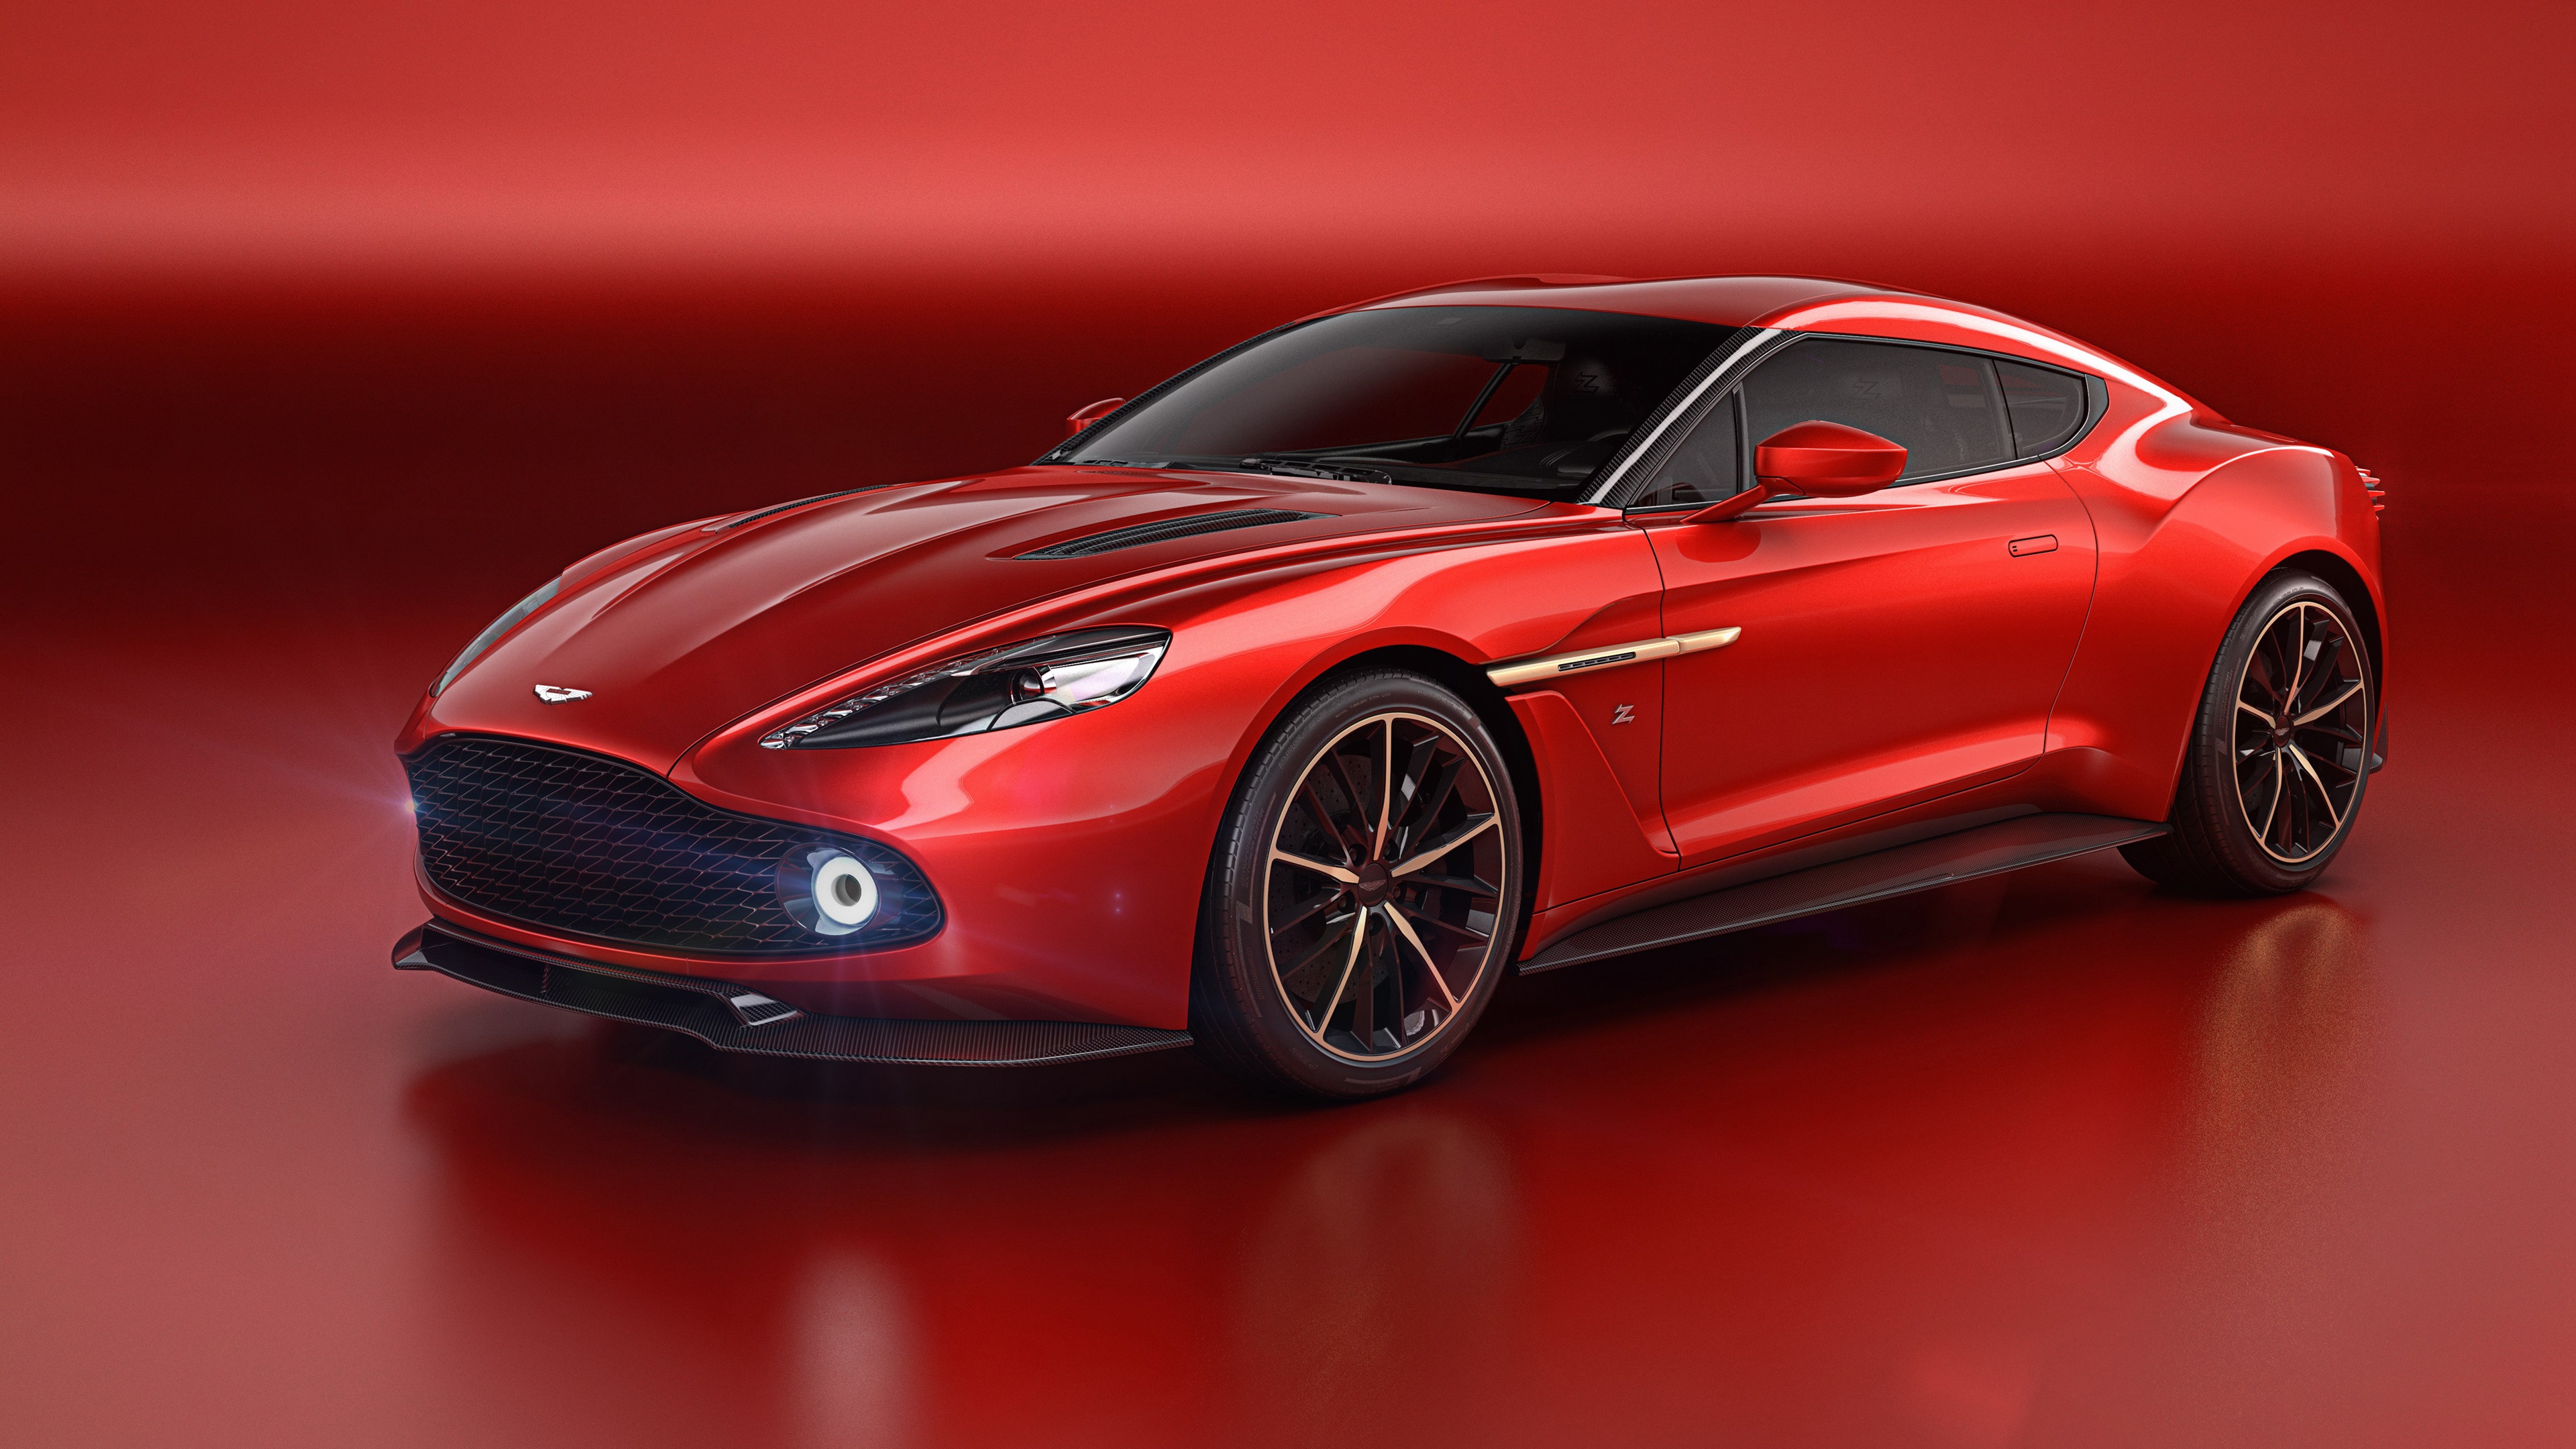 Aston Martin Vanquish Zagato Red Supercar 2016 Wallpaper Cars Wallpaper Better